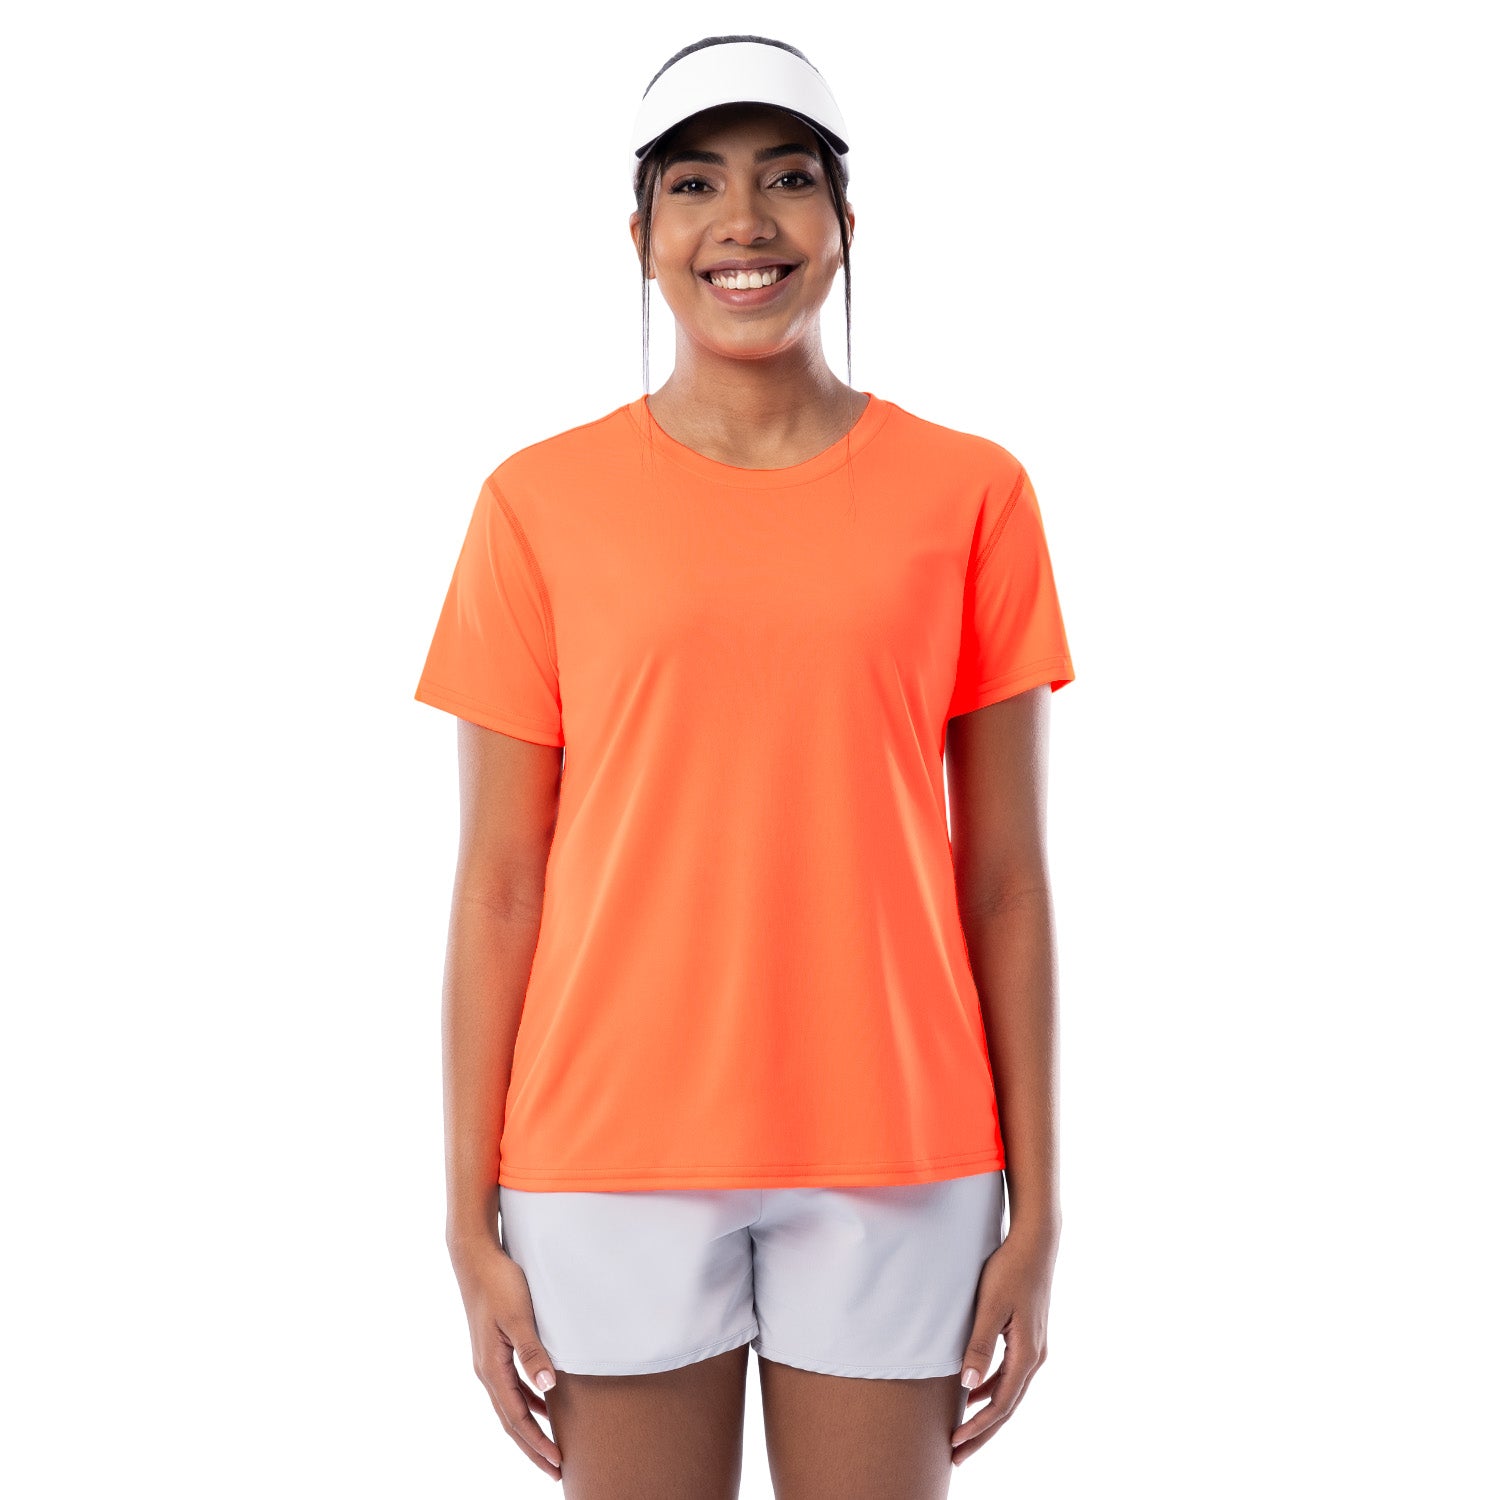 Women's Orange Training T-Shirt Front View